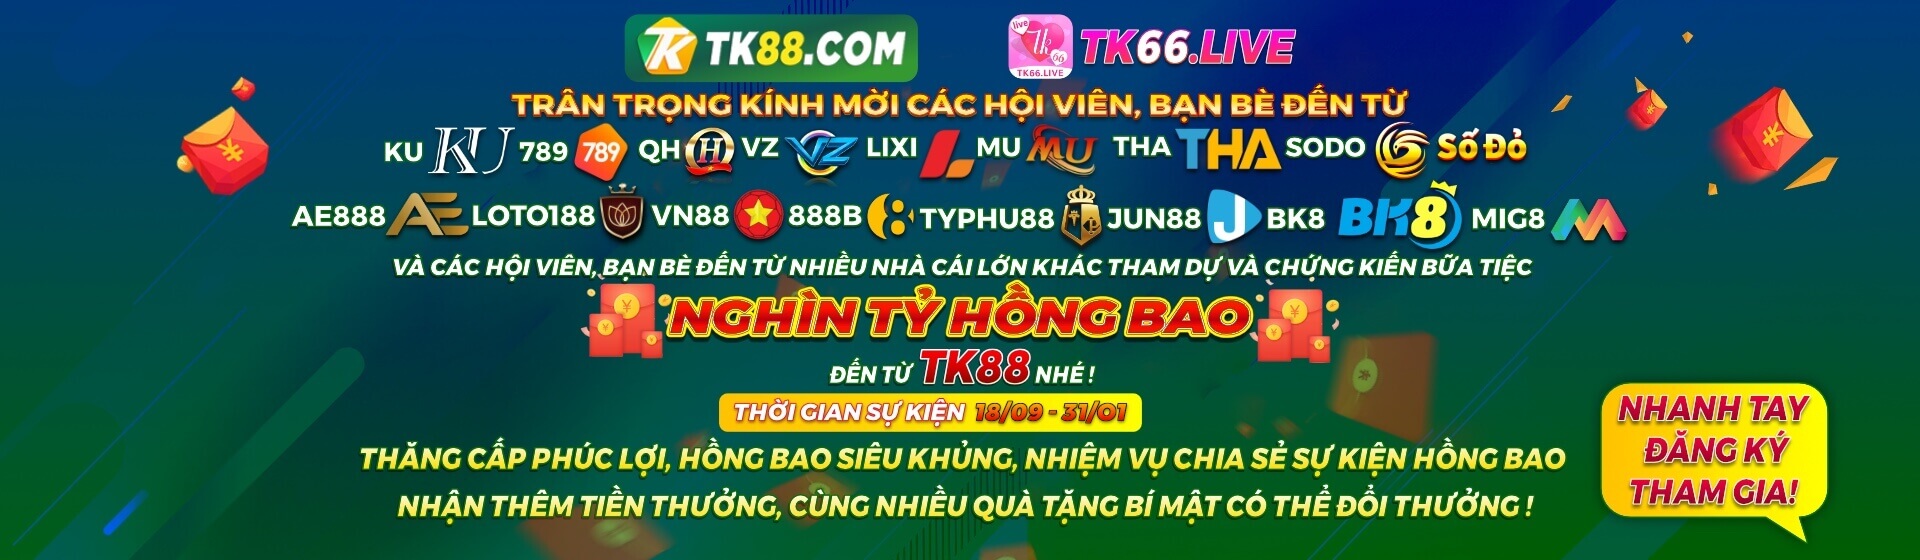 ban tk88vn.net casino 1011 1